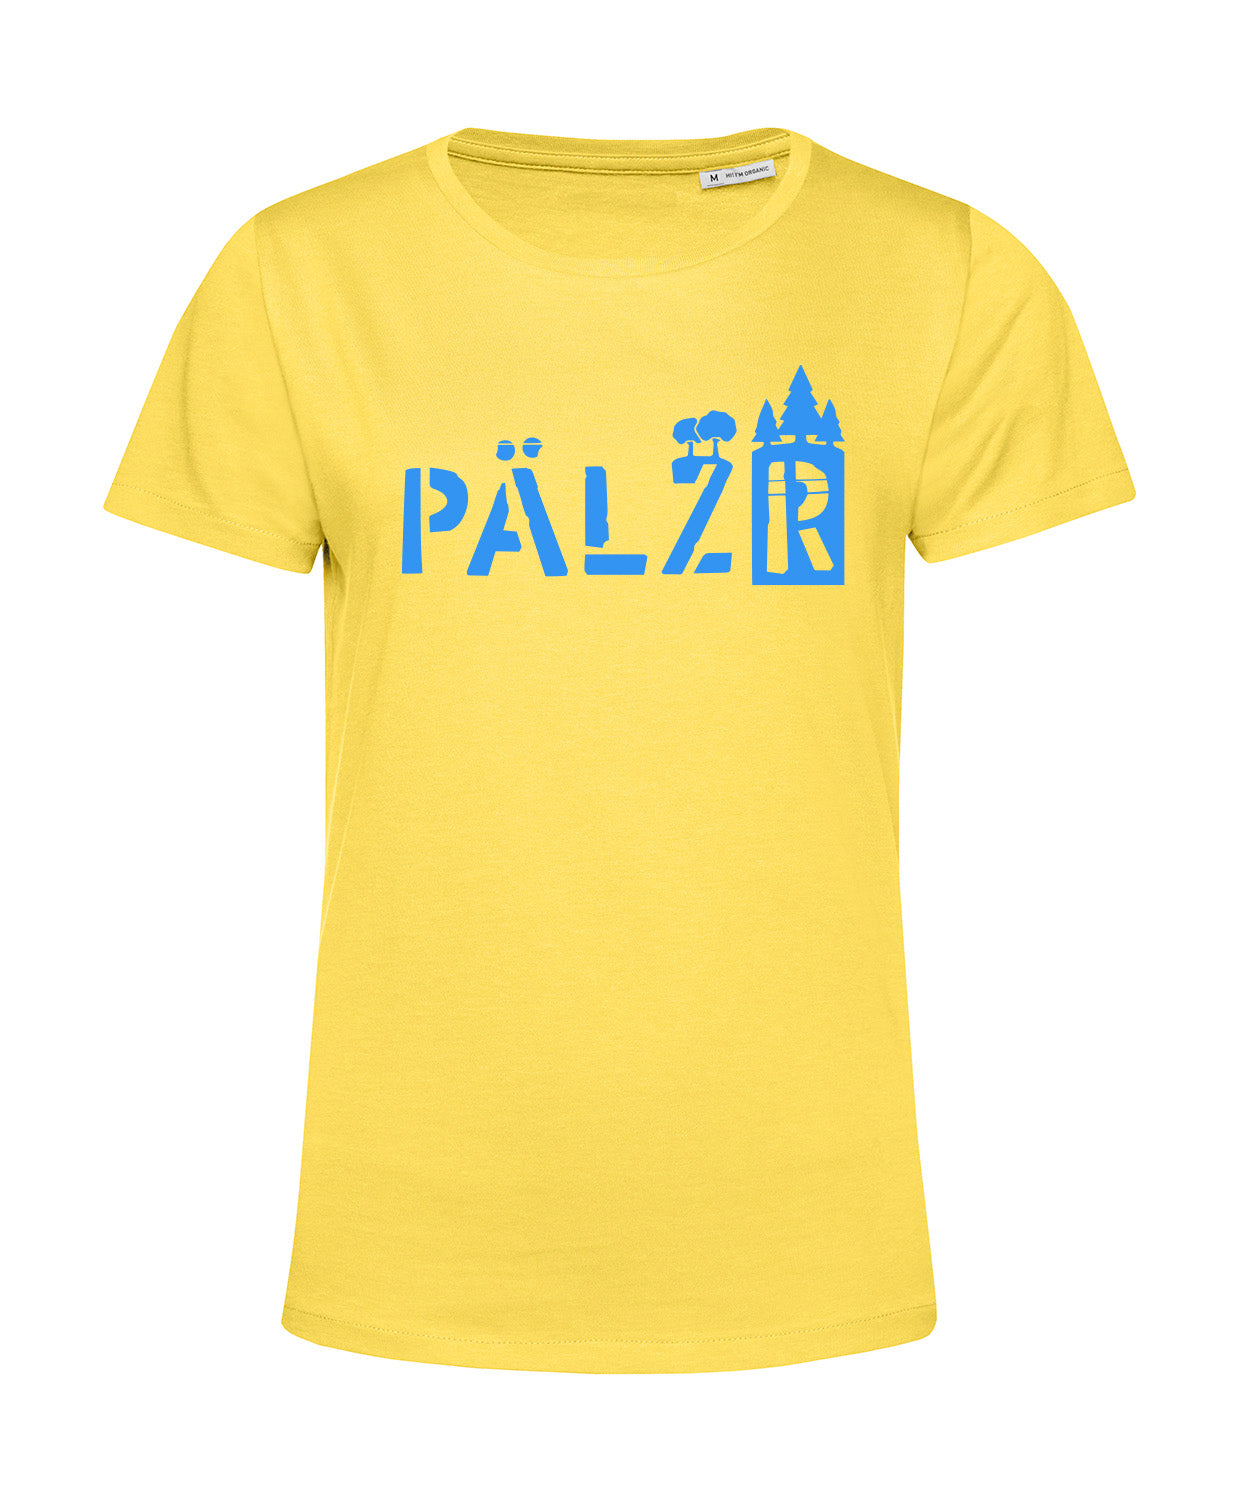 Frauen | T-Shirt | PÄLZRwald | Limo | Logo Neon Blau